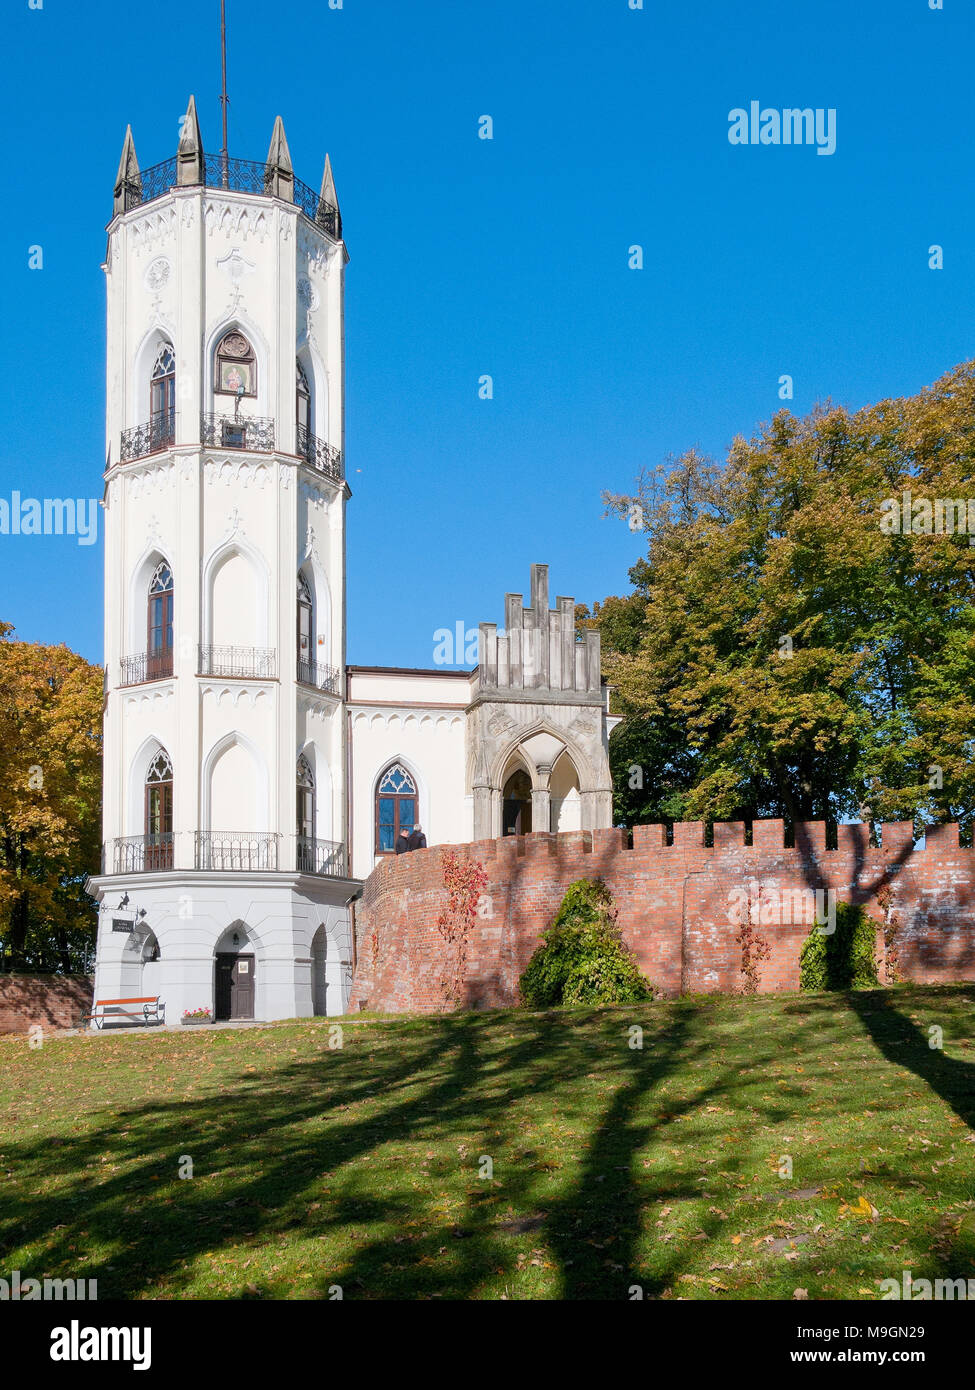 Neo gothic palace, the seat of the Krasinski family. Currently Museum of Romanticism. Opinogora, Mazovian province, Poland, Europe. Stock Photo